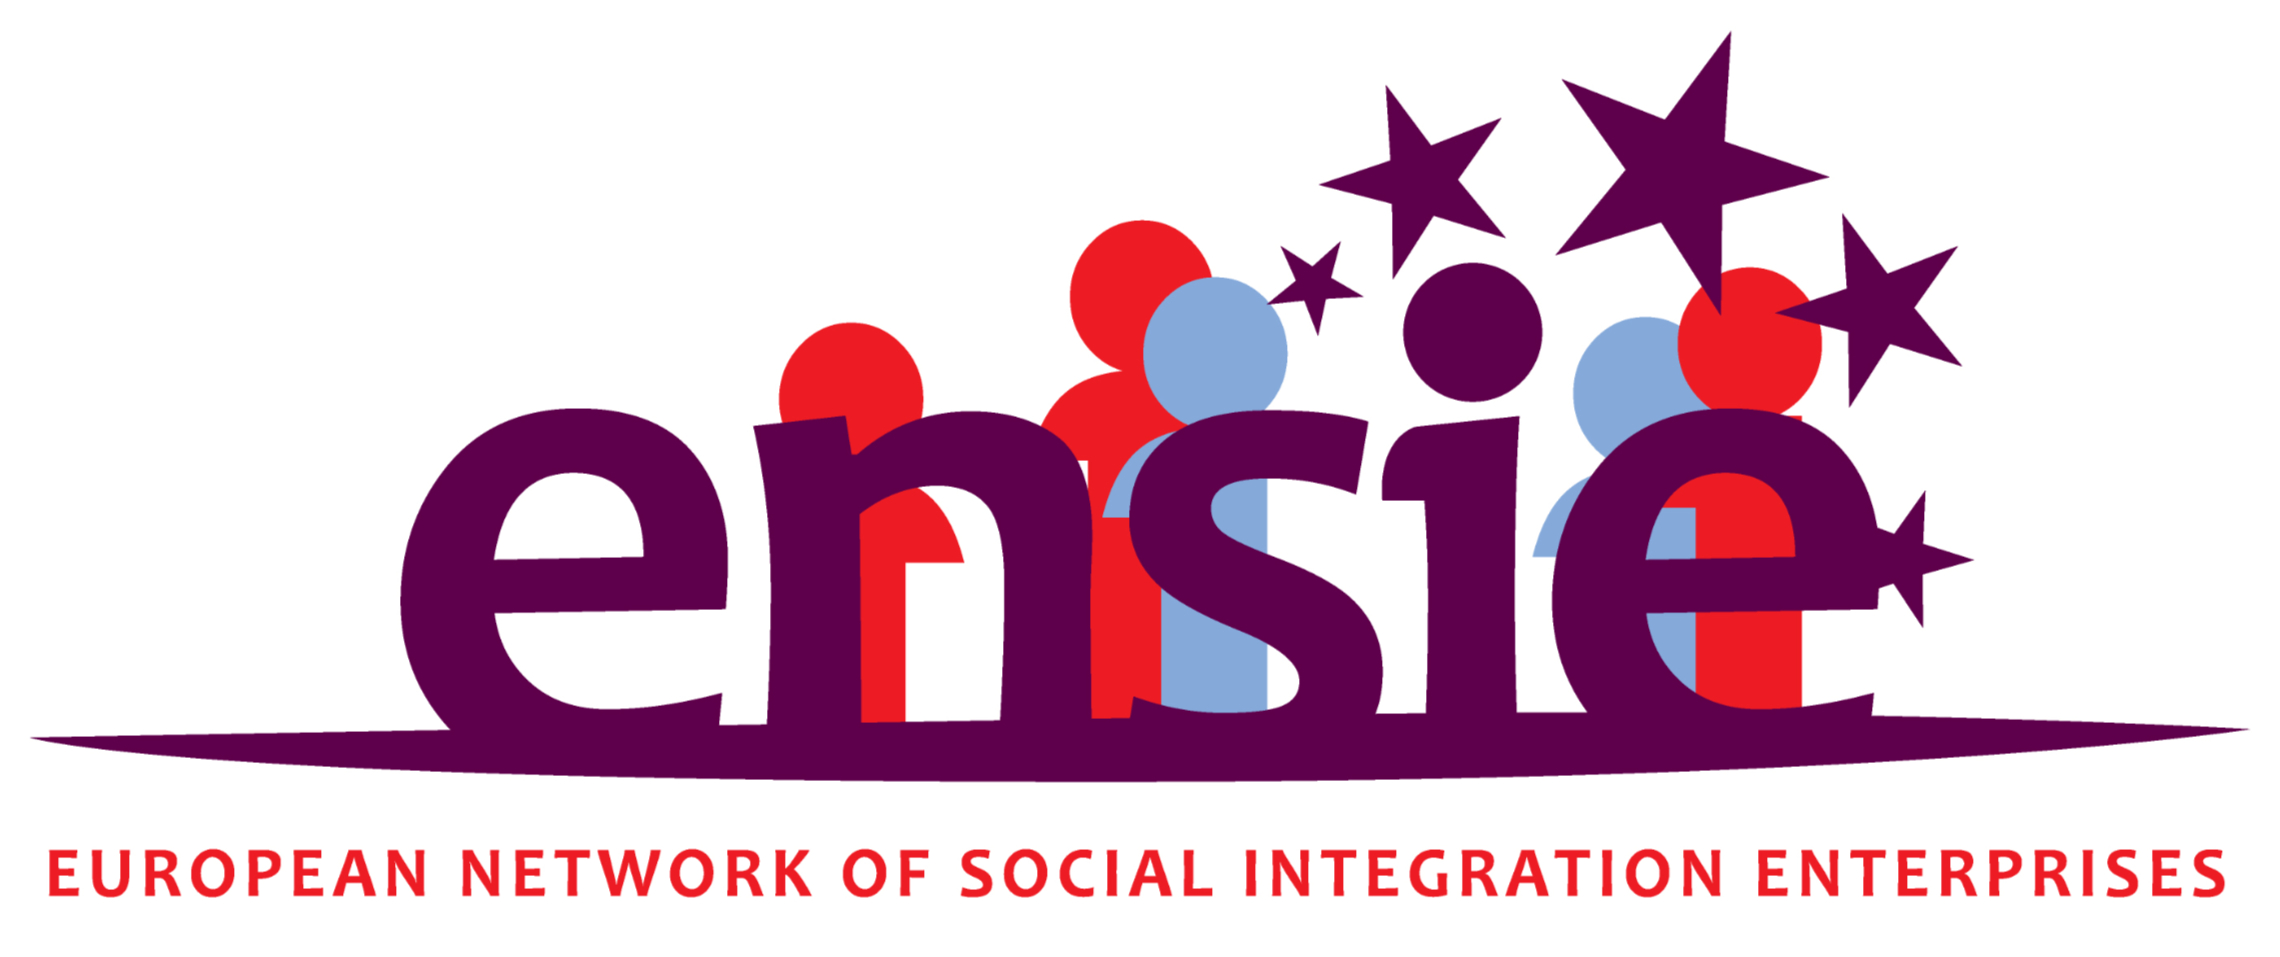 European Network Of Social Integration Enterprises